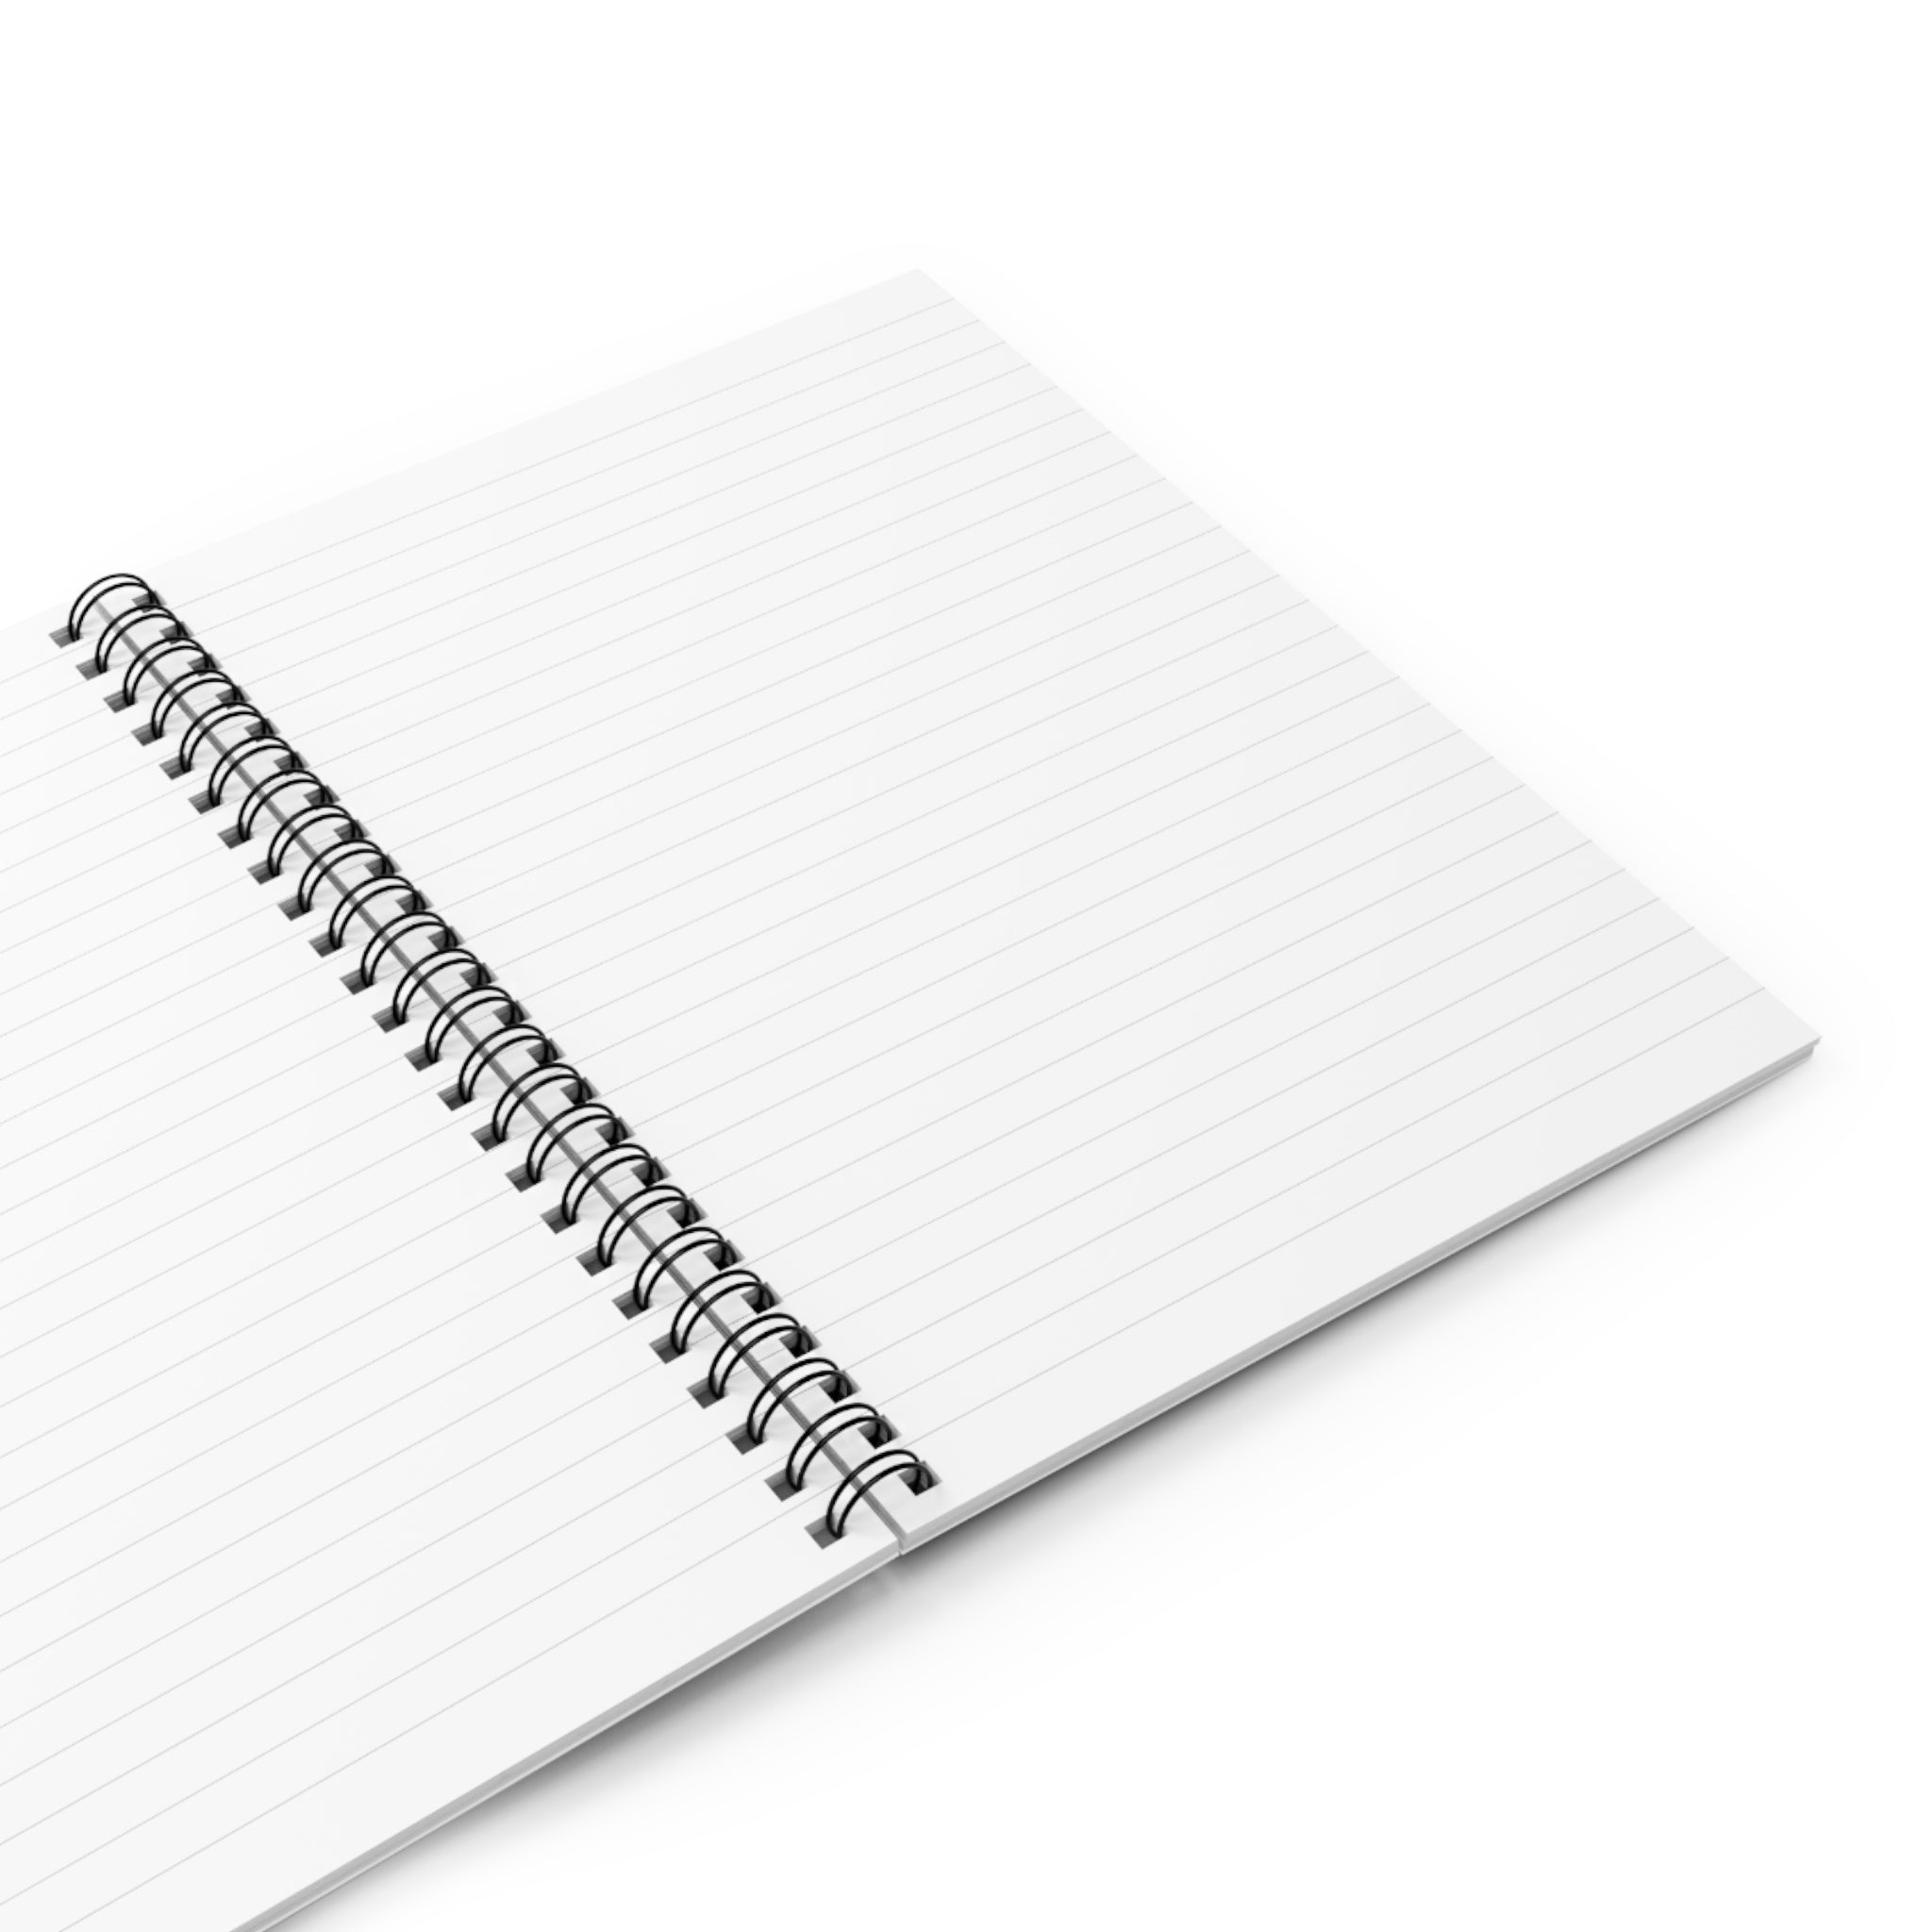 TWF Large Logo Notebook - Ruled Line